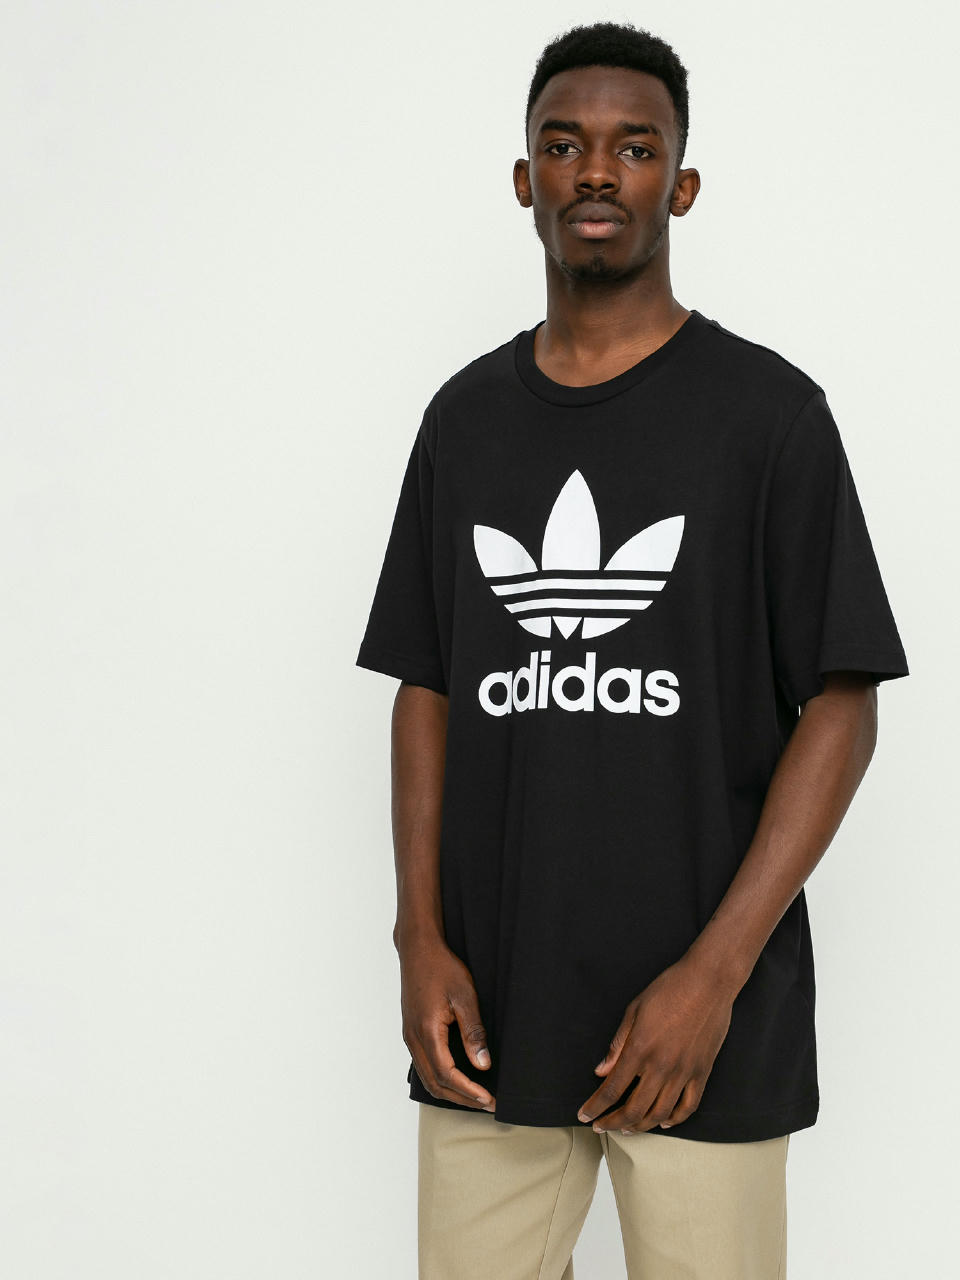 adidas Originals Trefoil T-shirt (black/white)